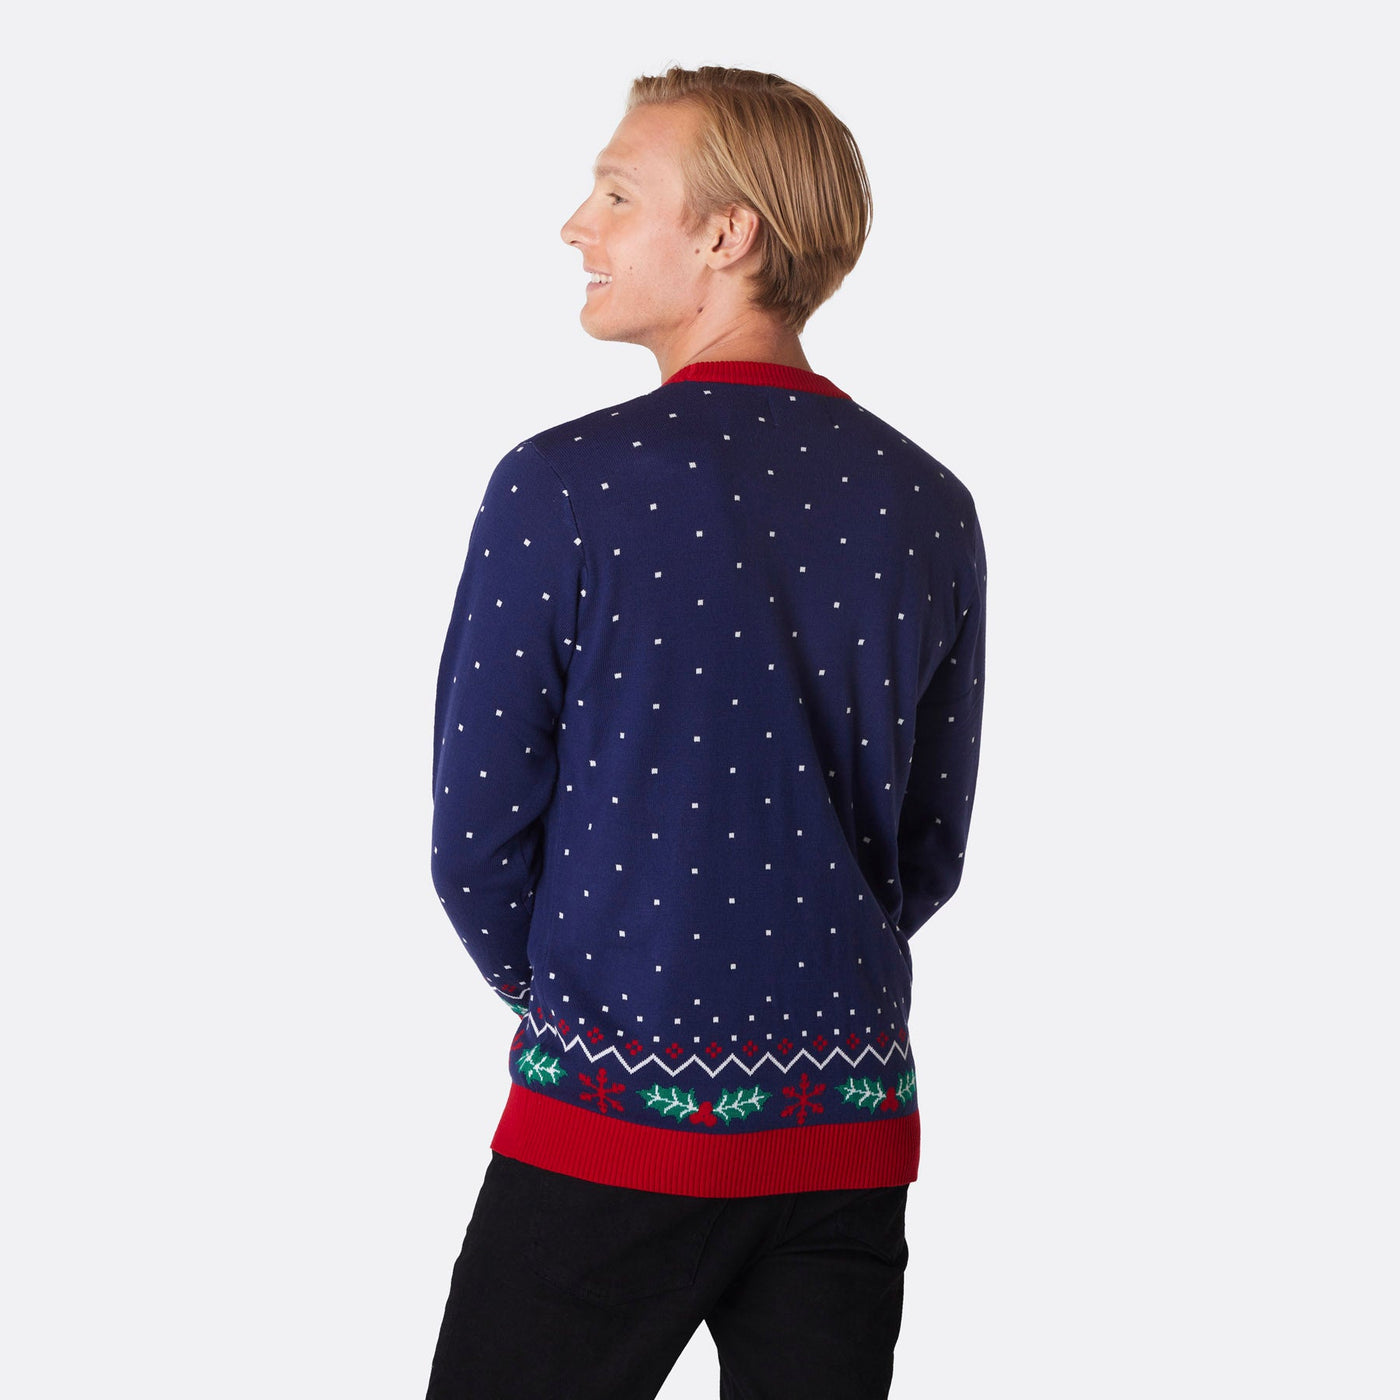 Men's Friends Christmas Sweater